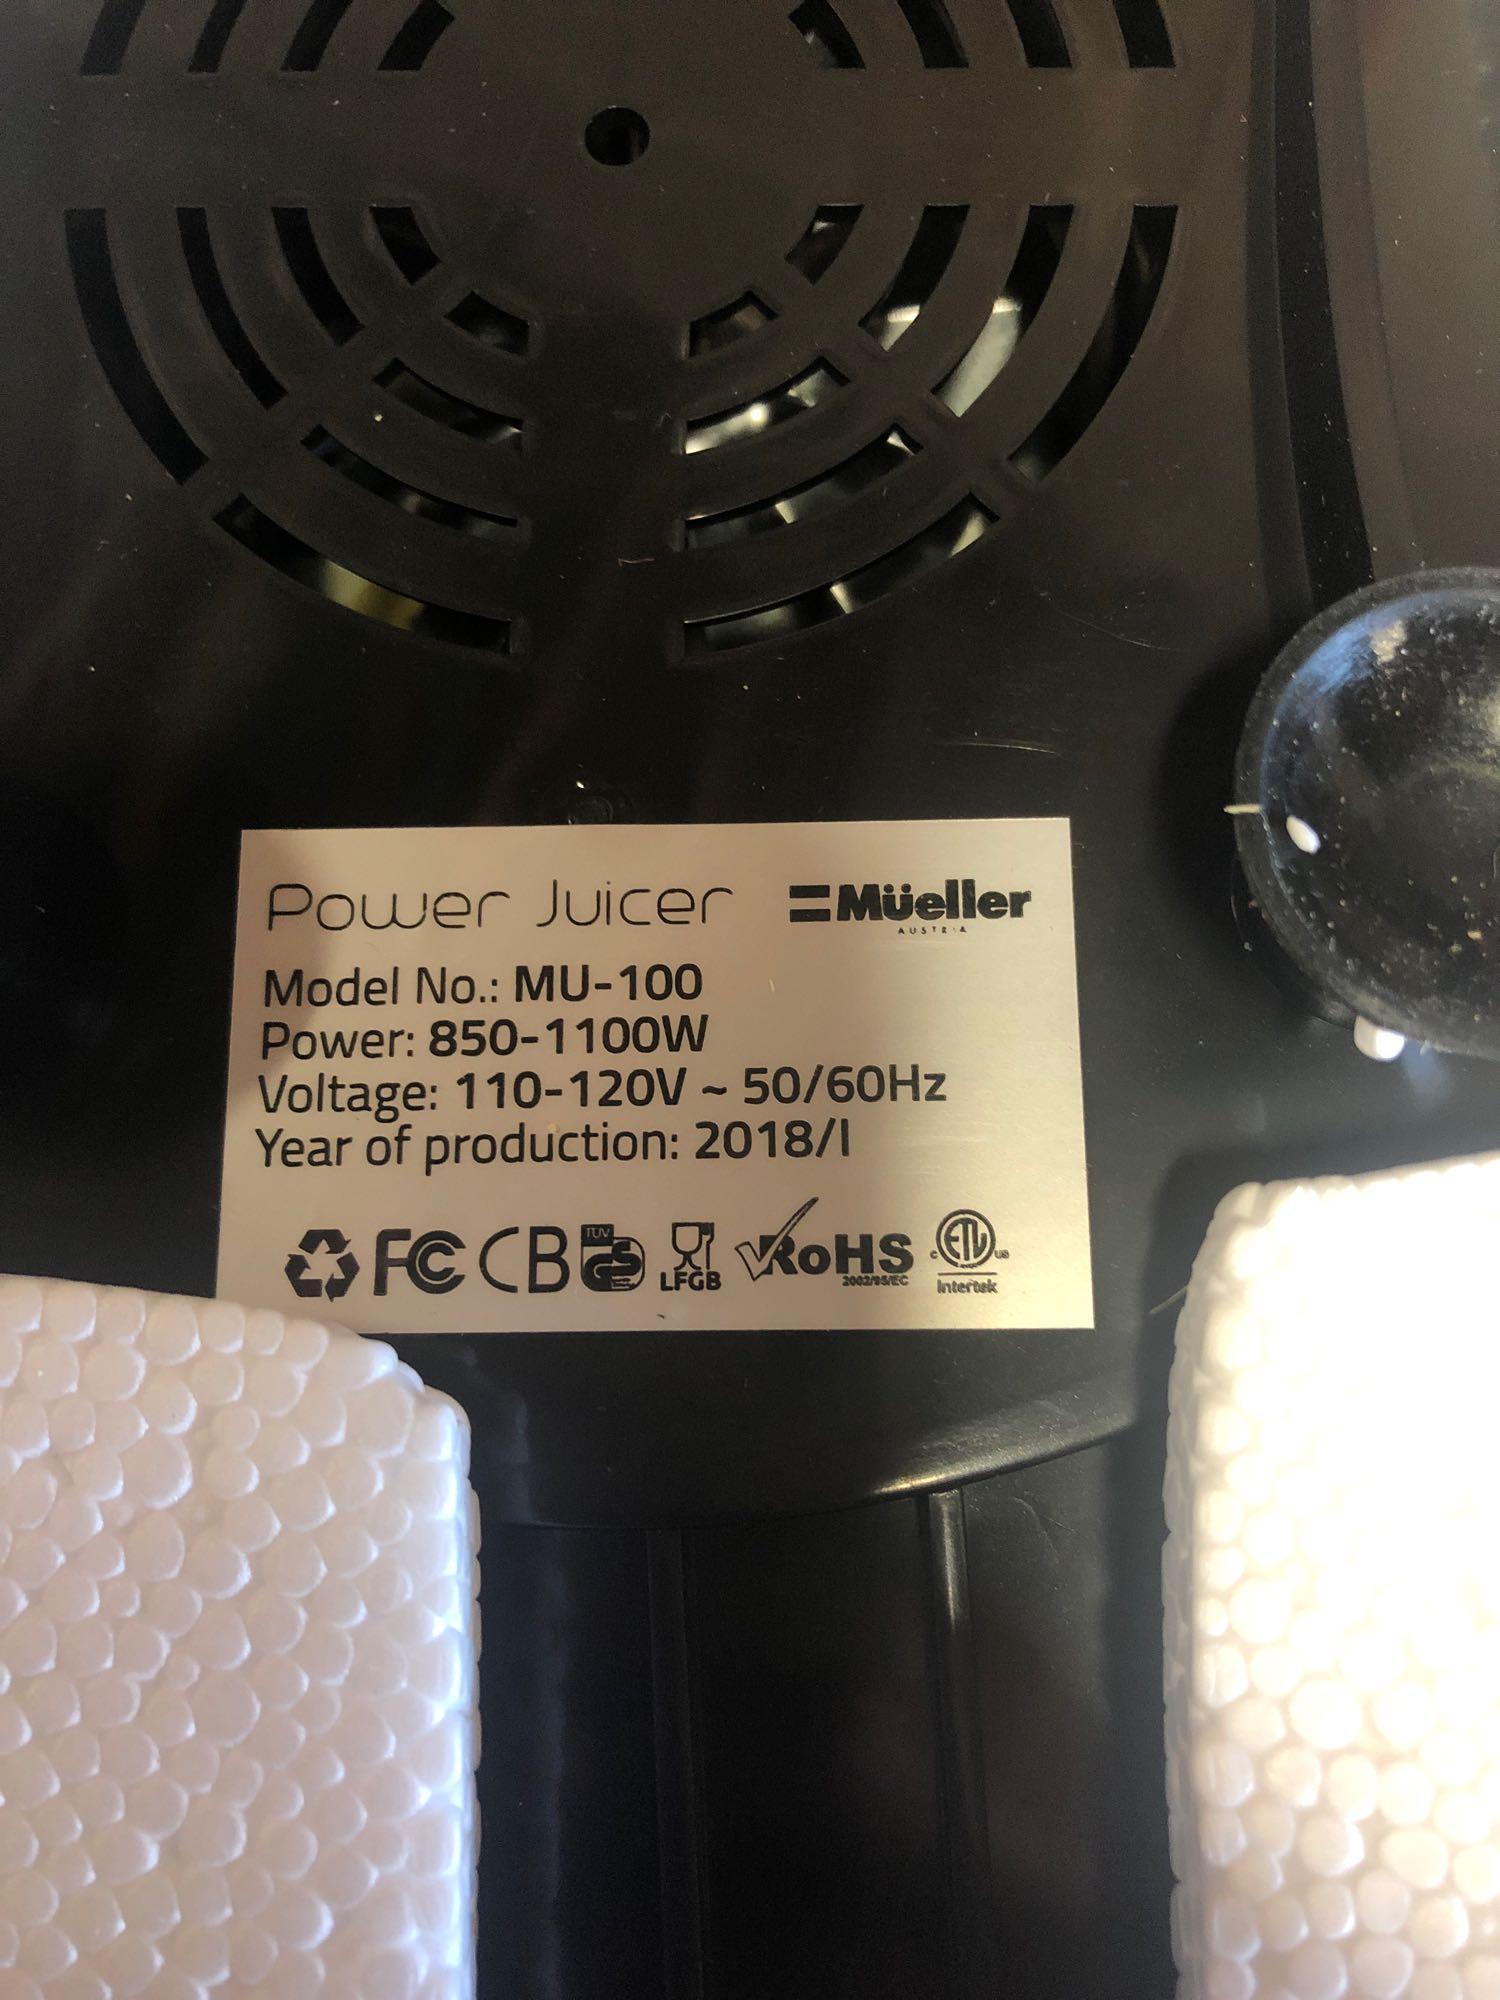 Mueller Austria Juicer Ultra 1100W Power - $59.97 MSRP